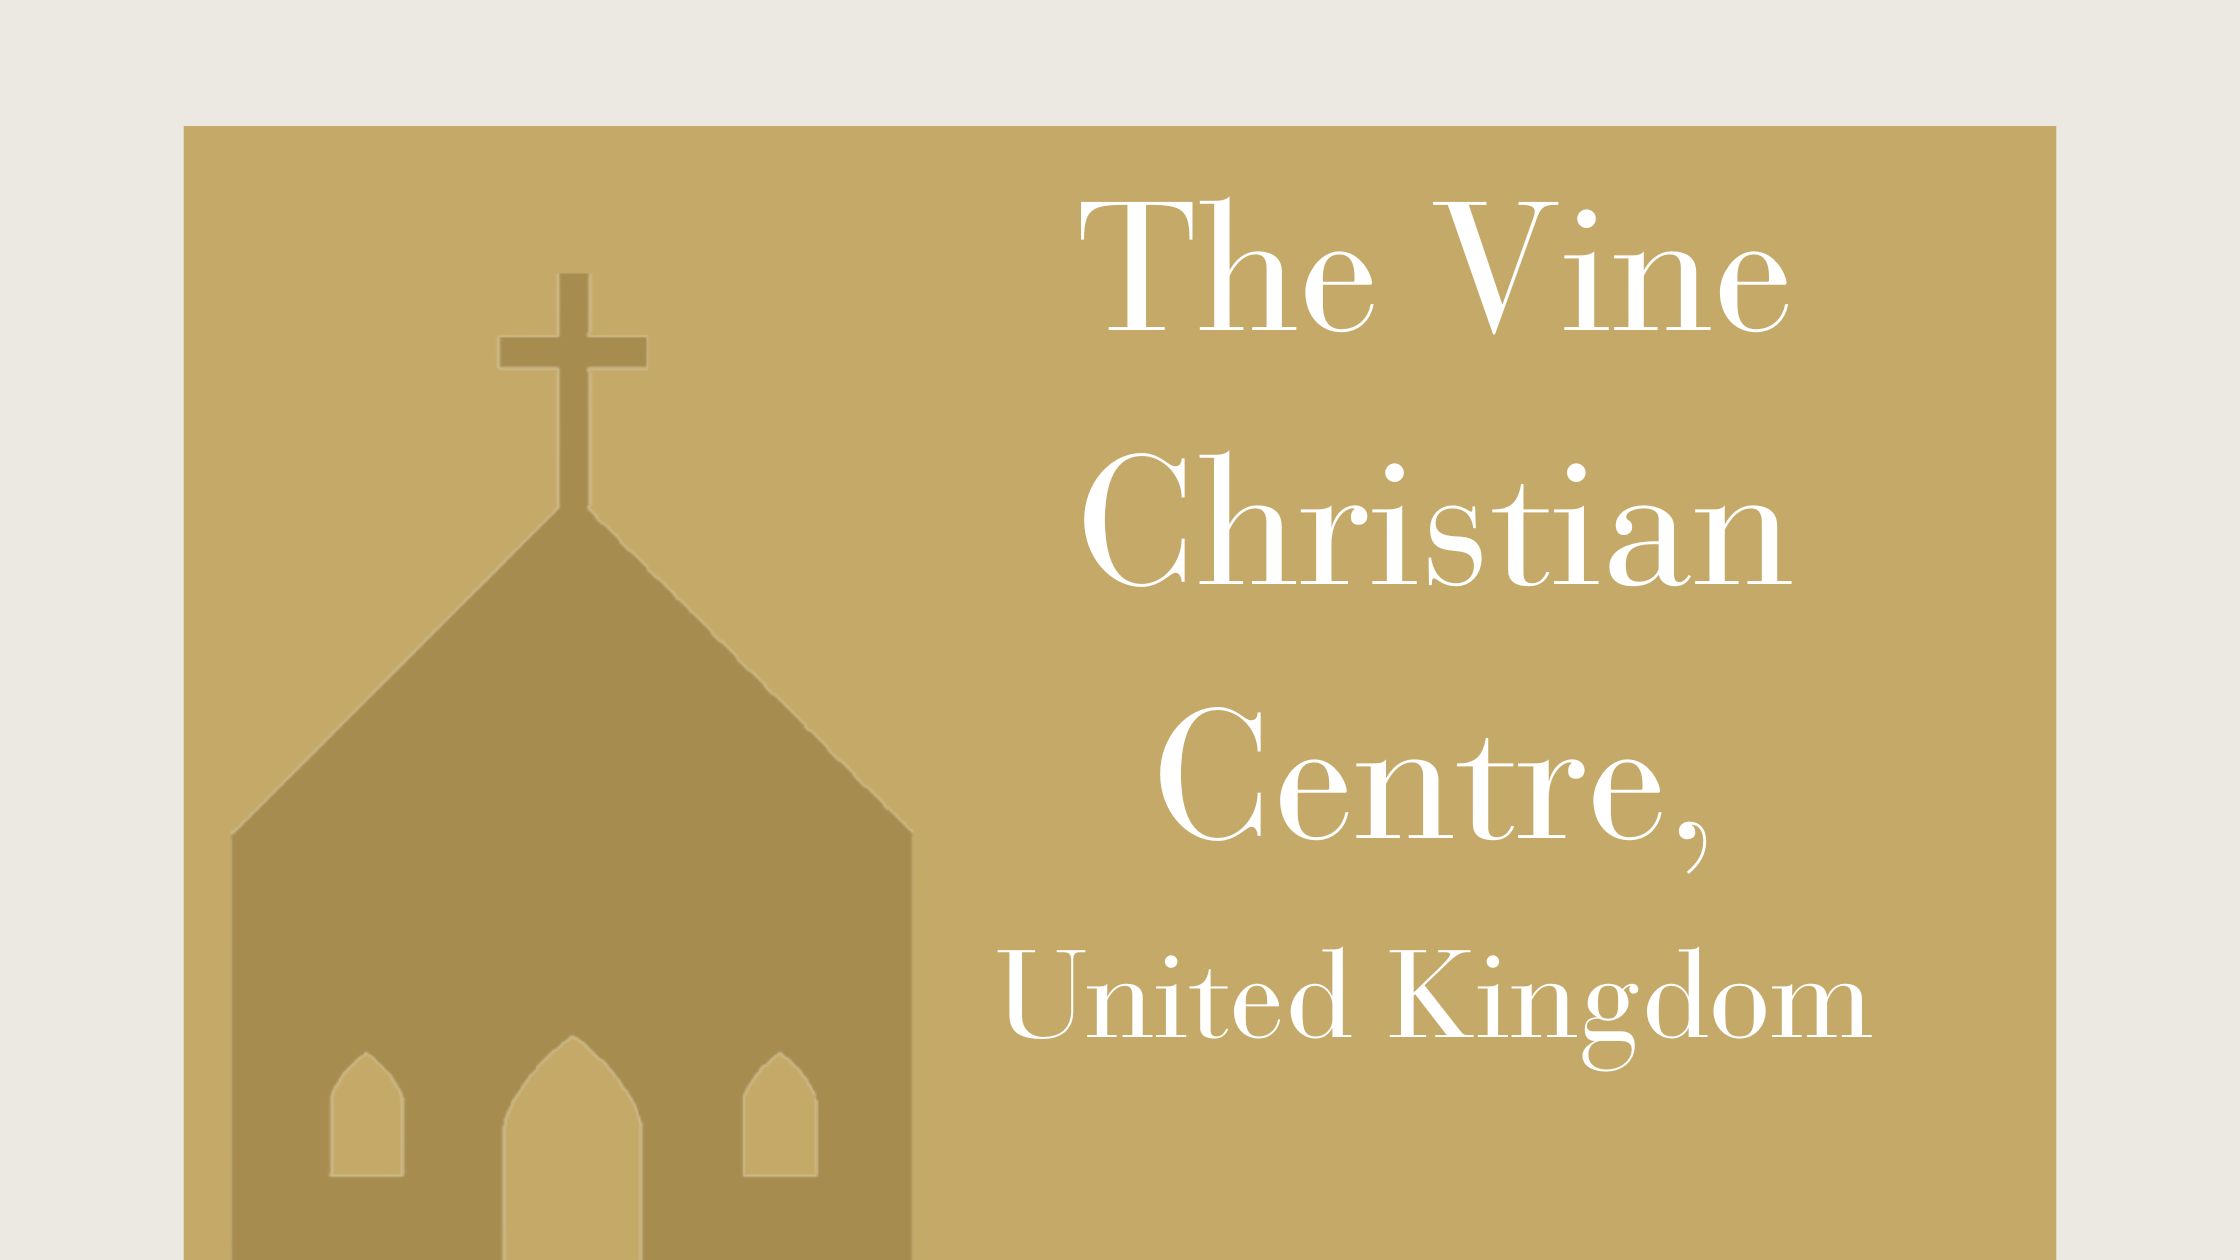 The Vine Christian Centre